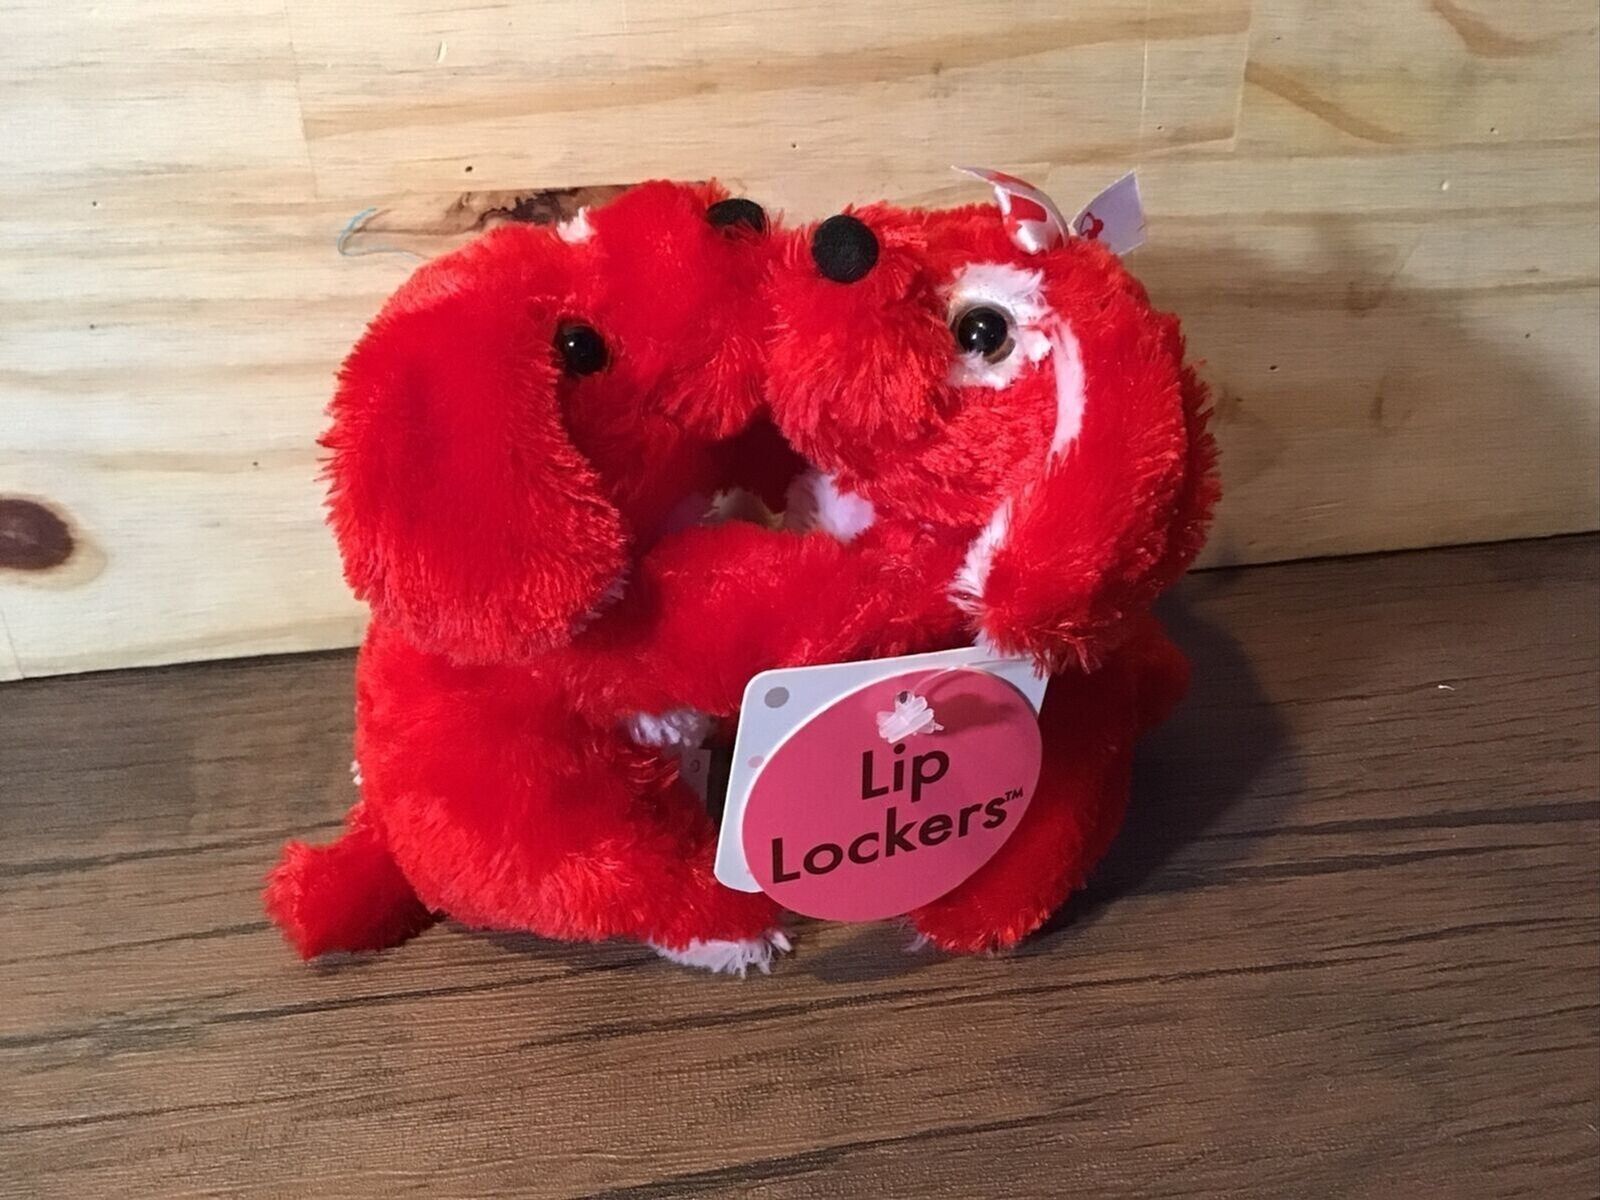 Dan Dee Lip Lockers Magnetic Kissing Dogs Stuffed Animal New w/Tags - $9.20